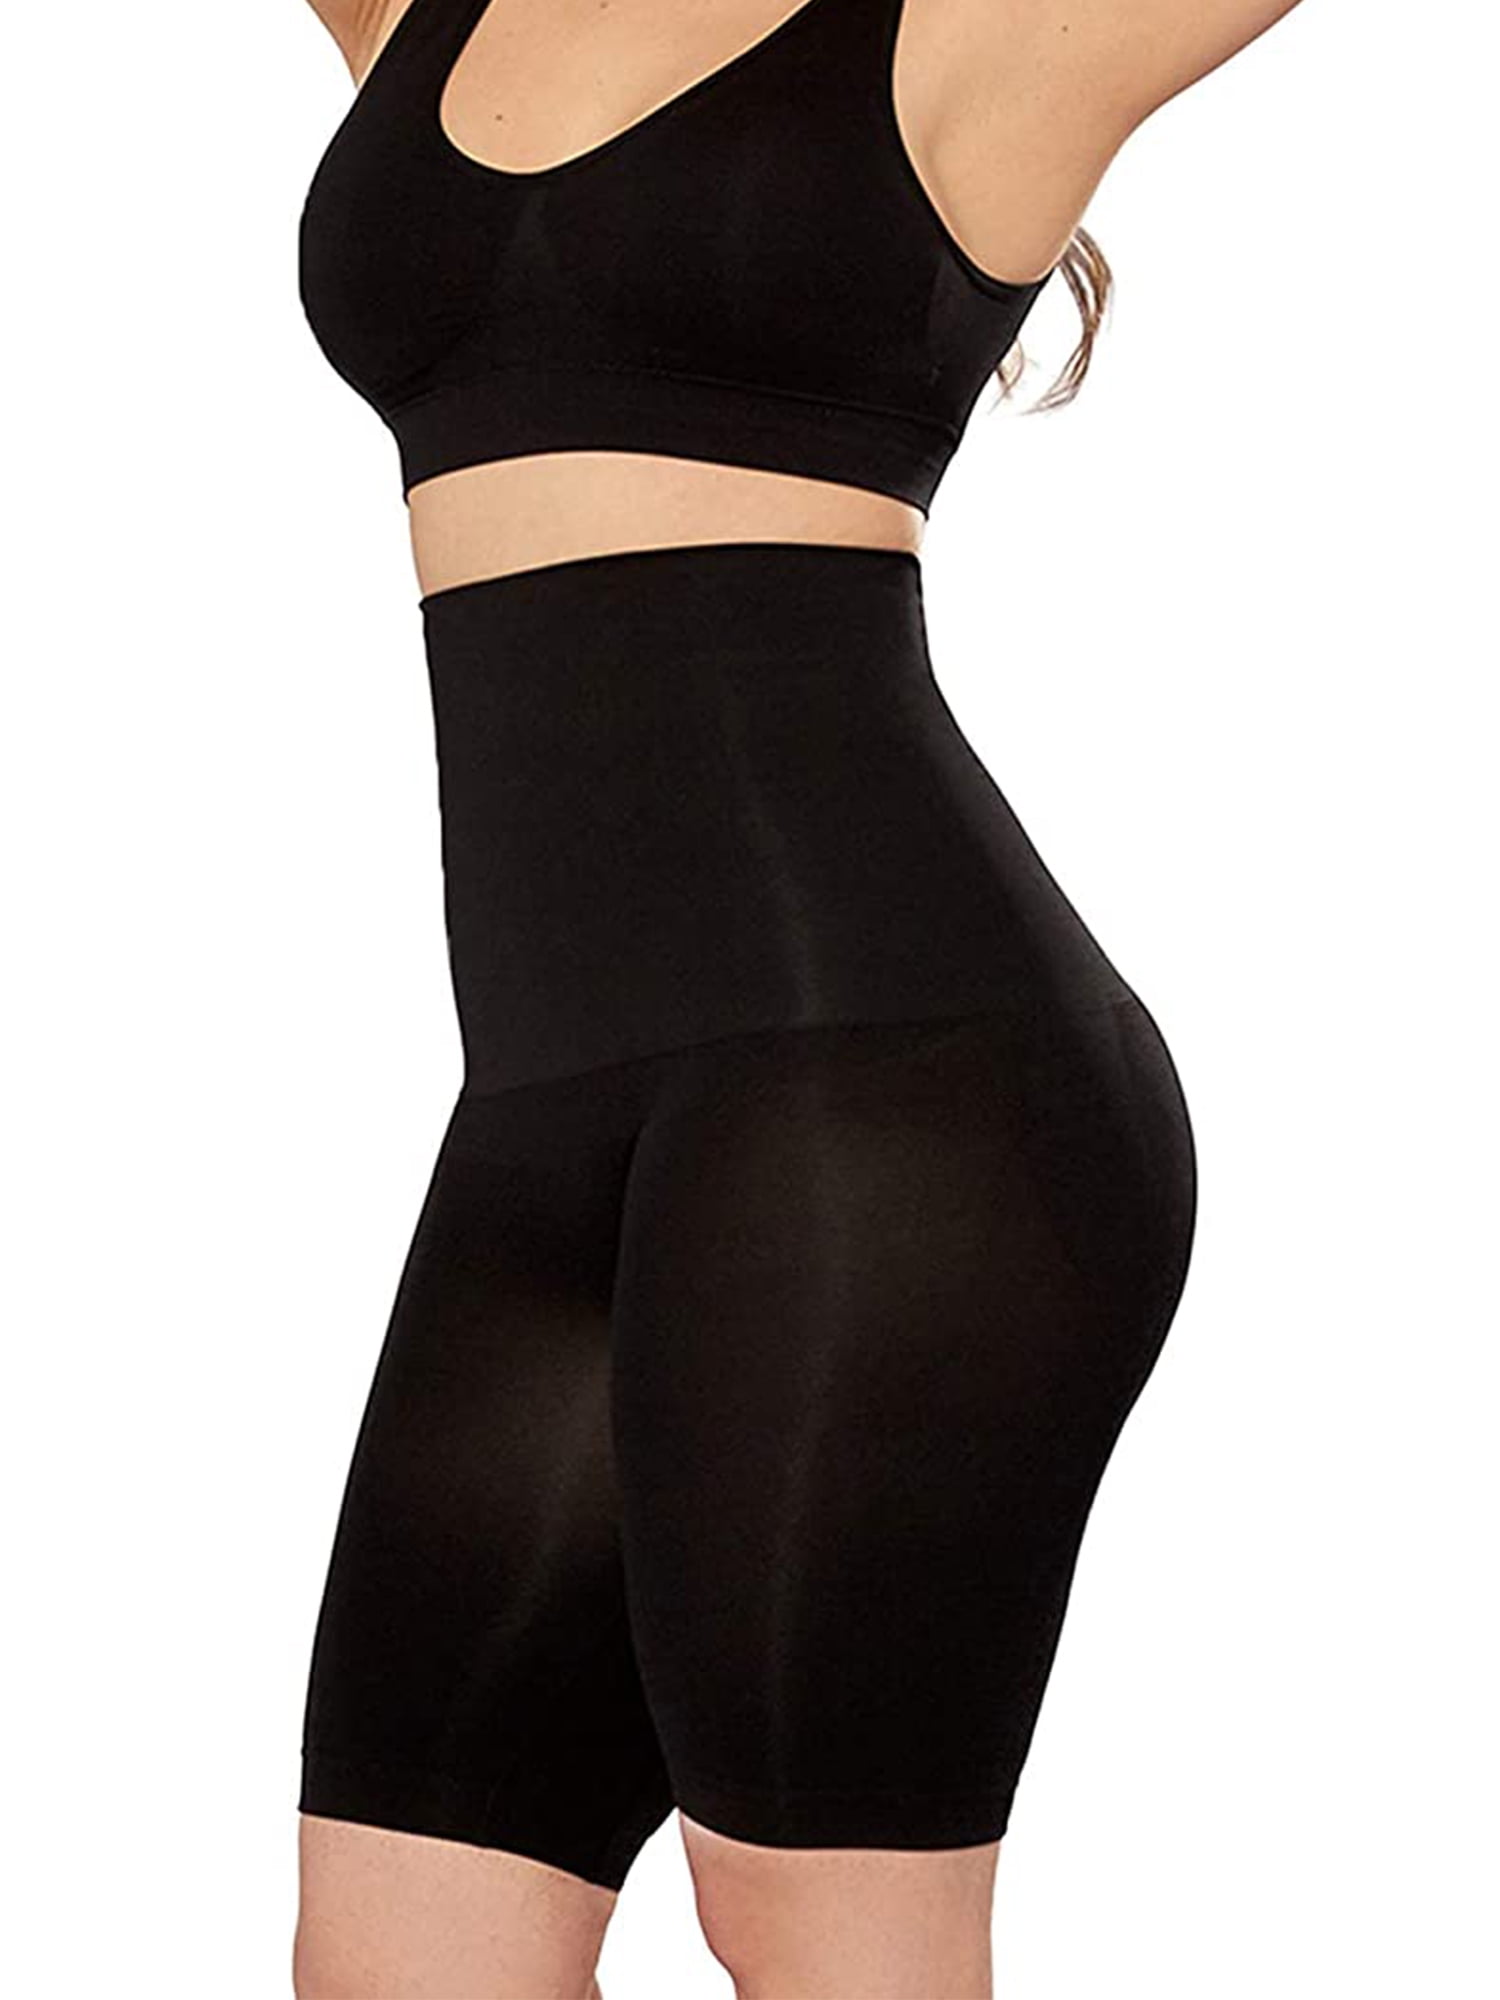 Joyshaper Womens Slip Short Panty High Waist Thigh Slimmer Shapewear Tummy Control Shorts for Underwear